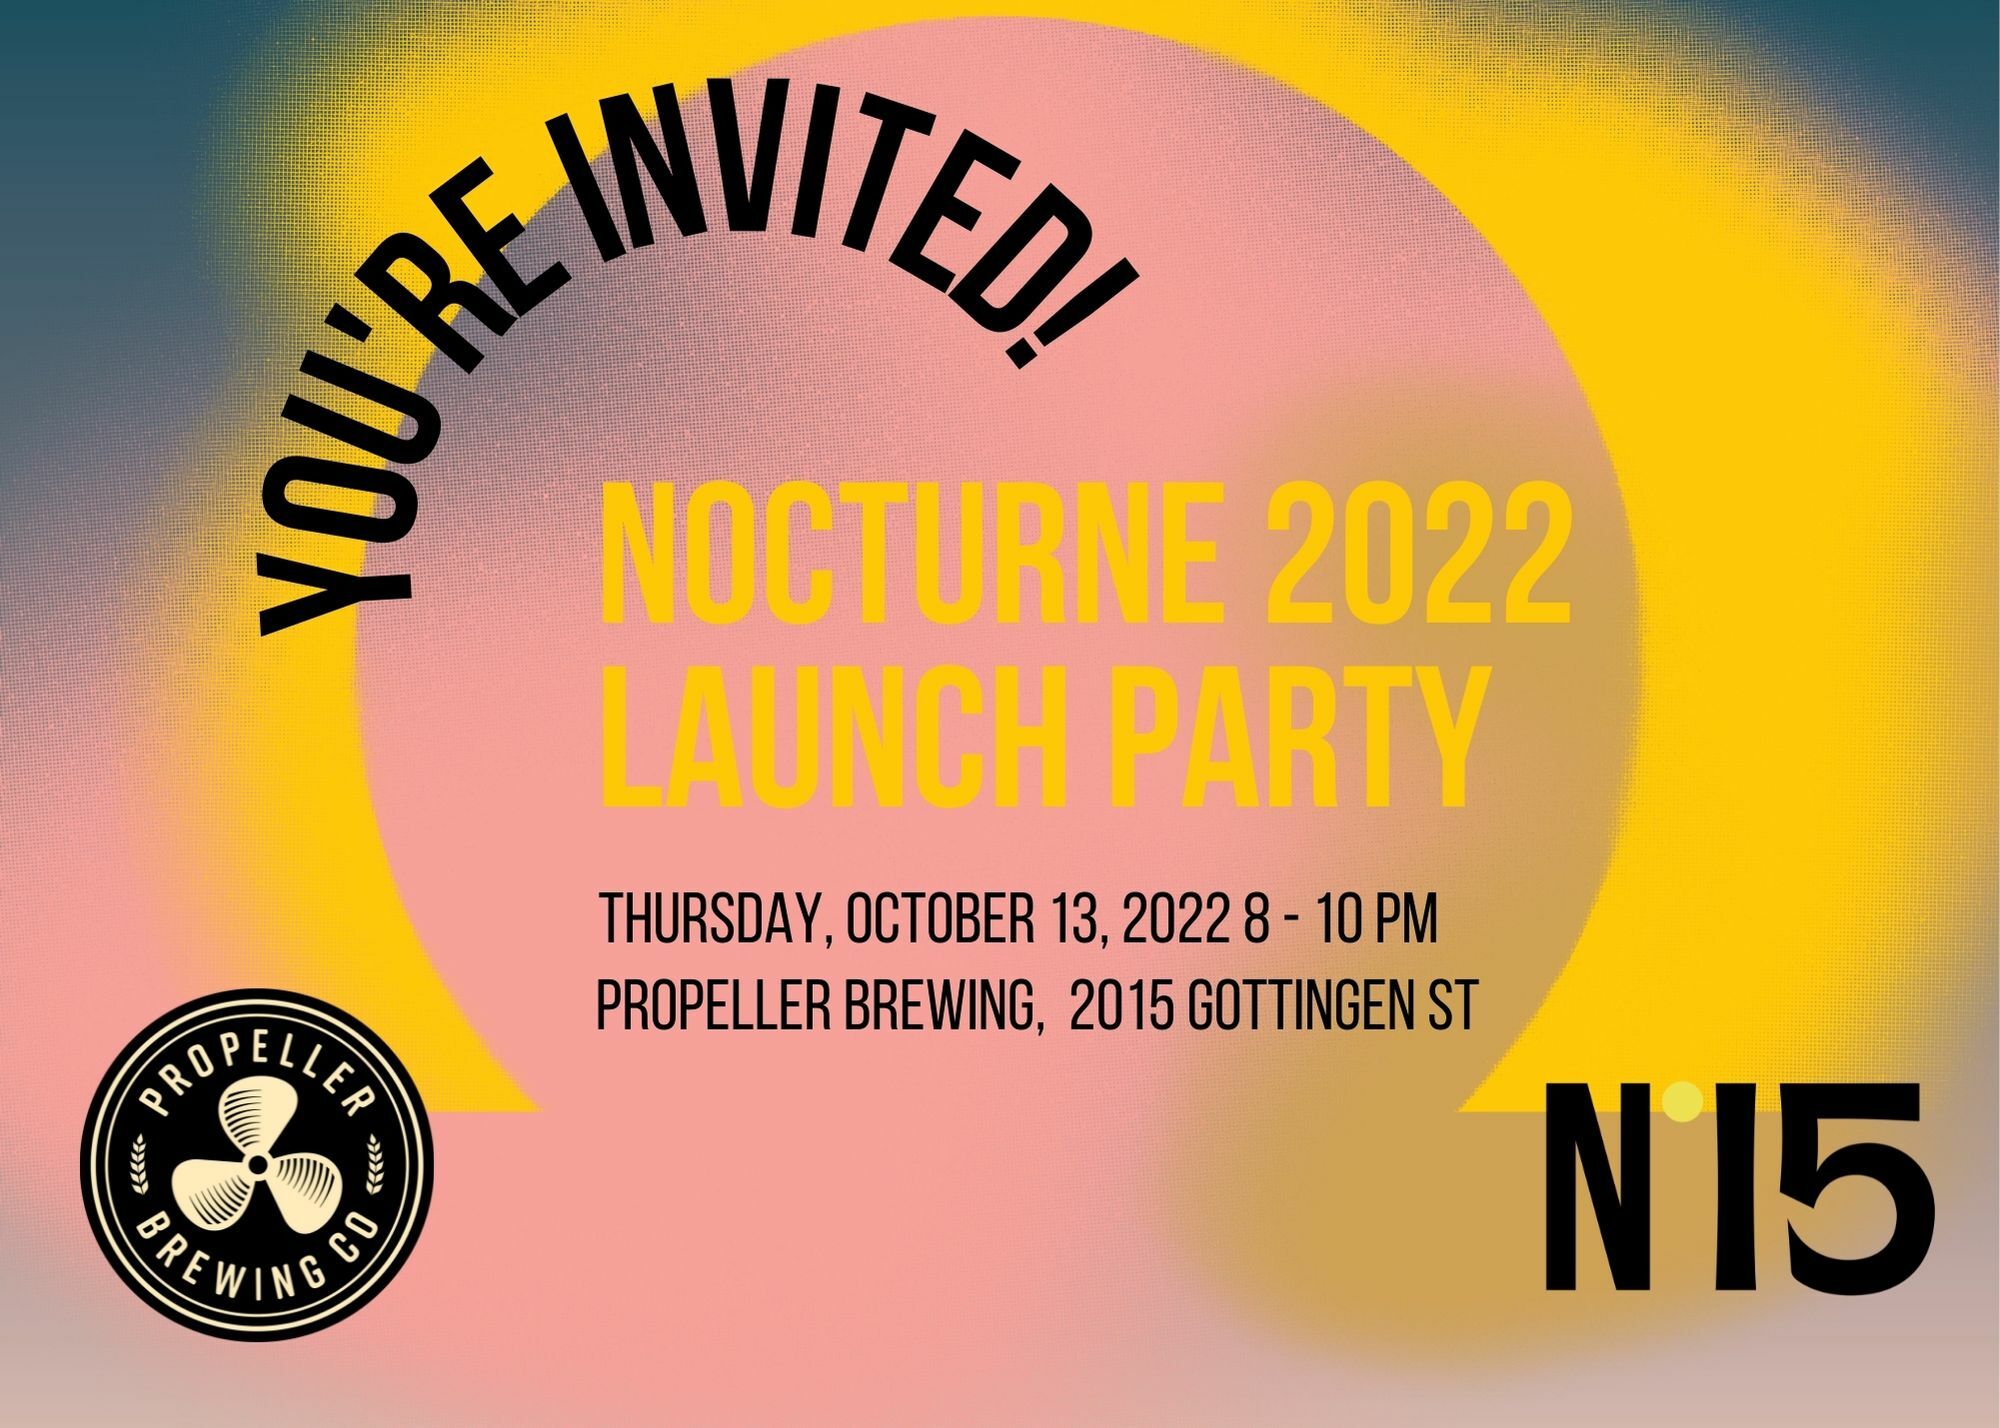 NOCTURNE 2022 LAUNCH PARTY INVITATION